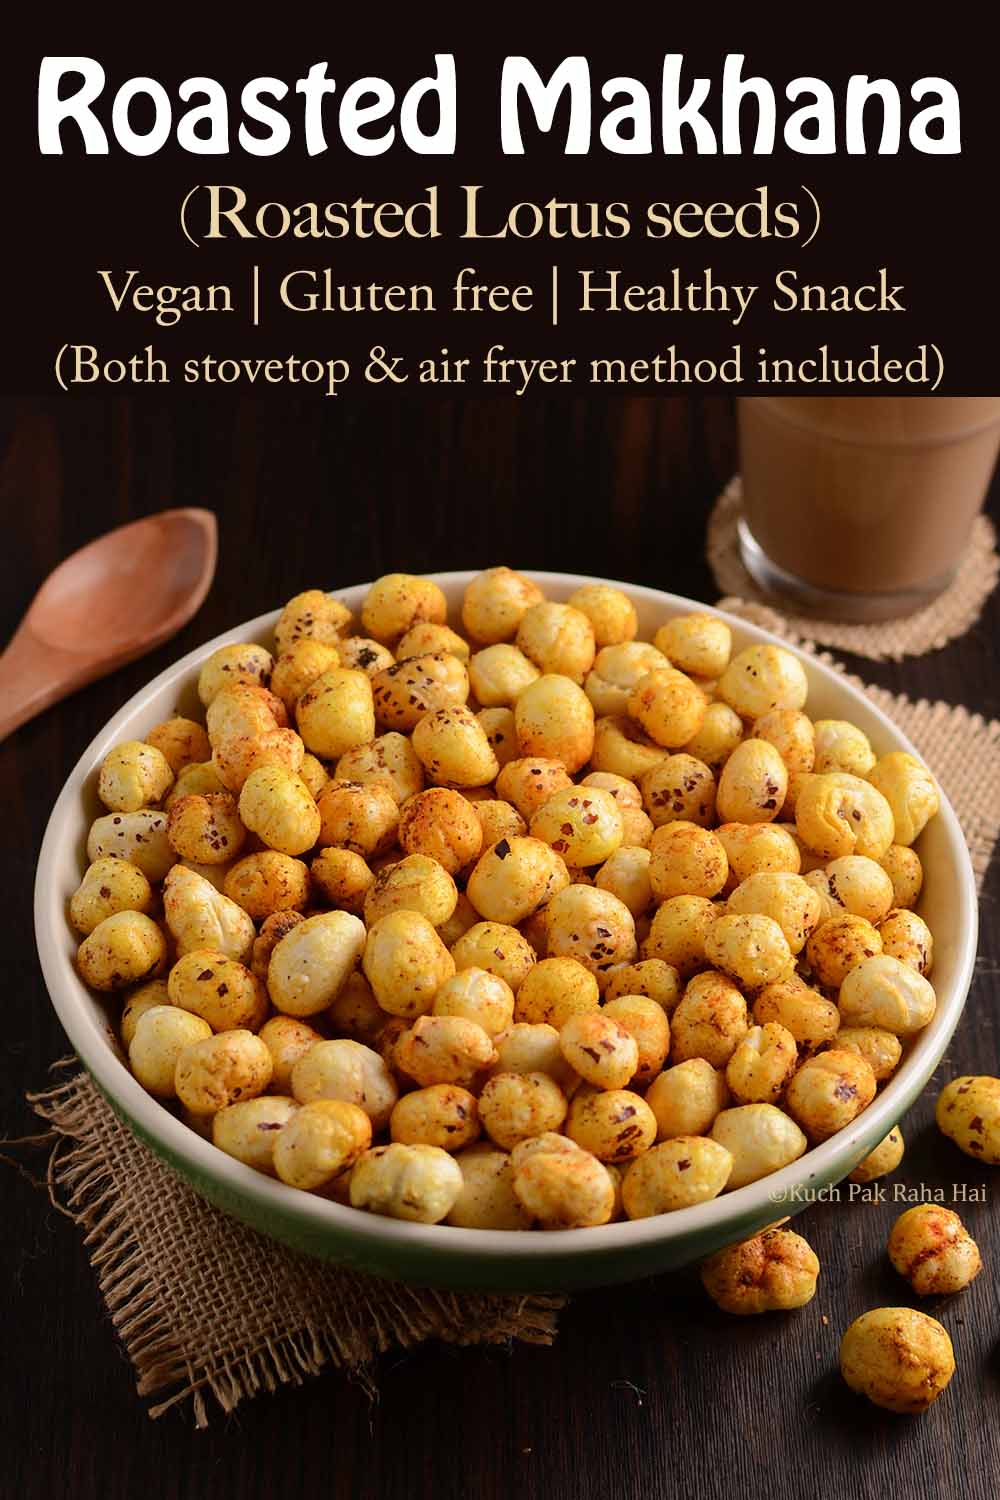 Roasted Makhana Vegan Gluten Free healthy snack.